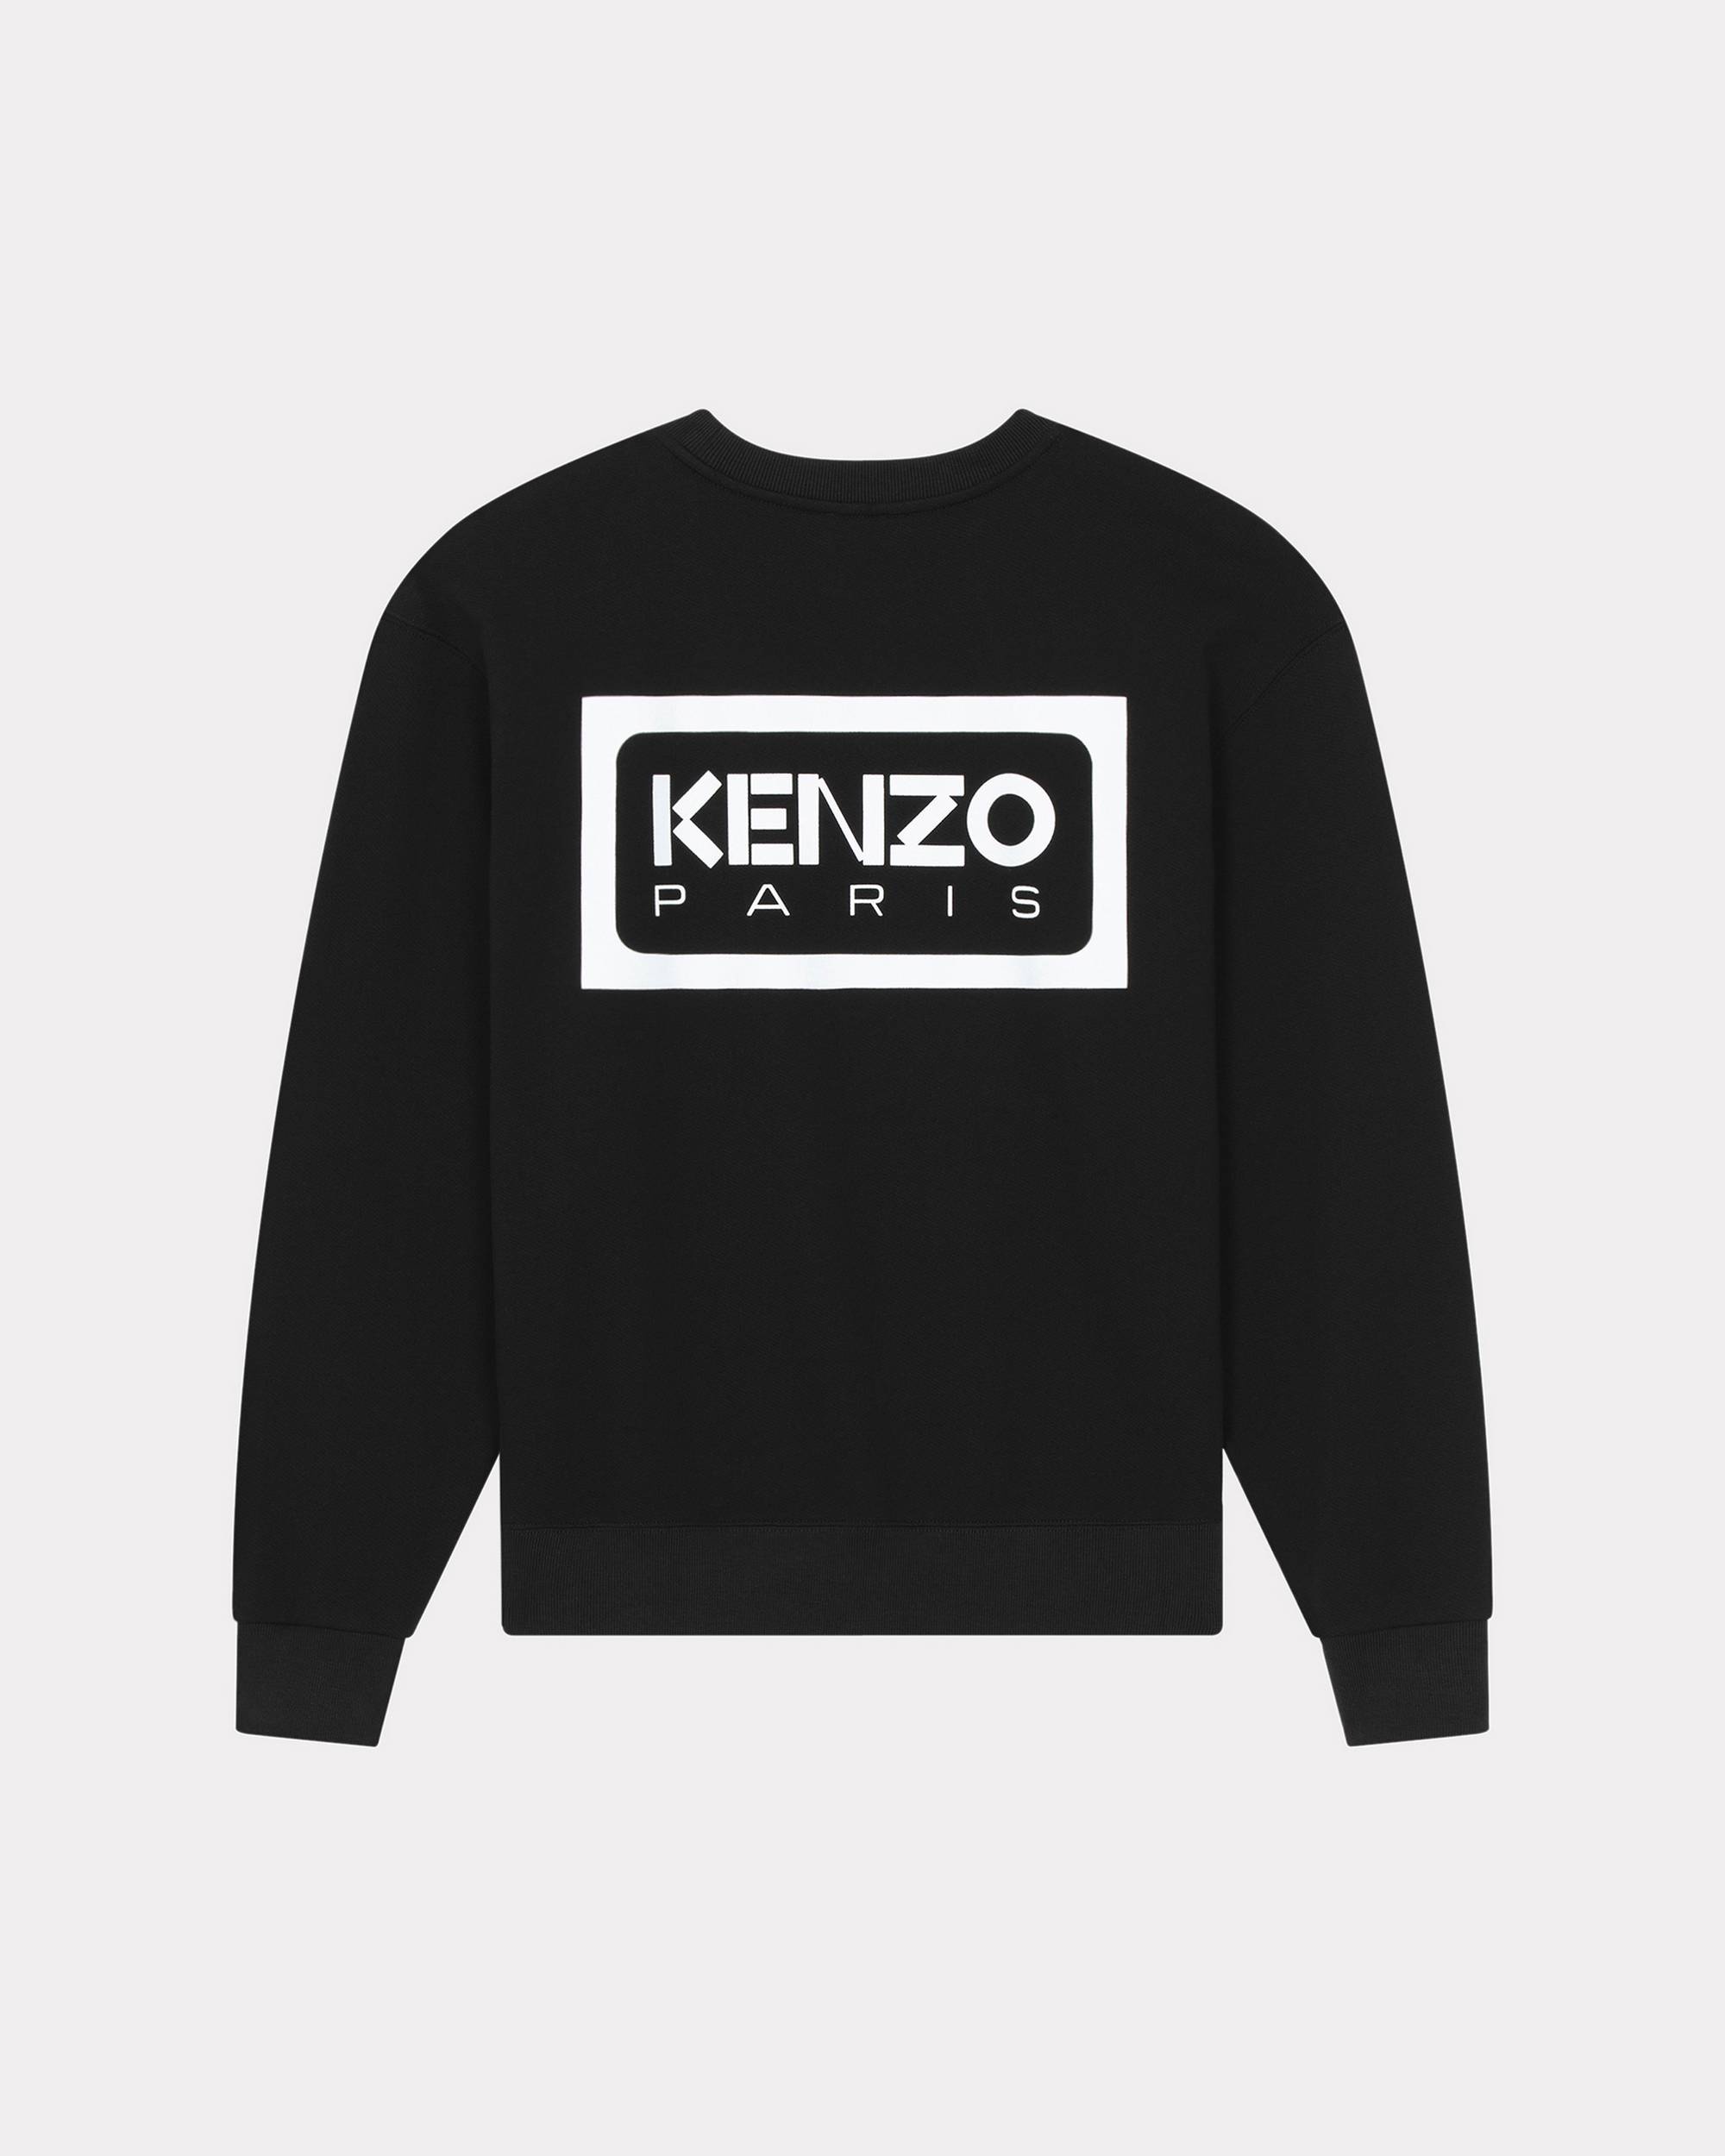 'Bicolor KENZO Paris' classic embroidered sweatshirt - 2